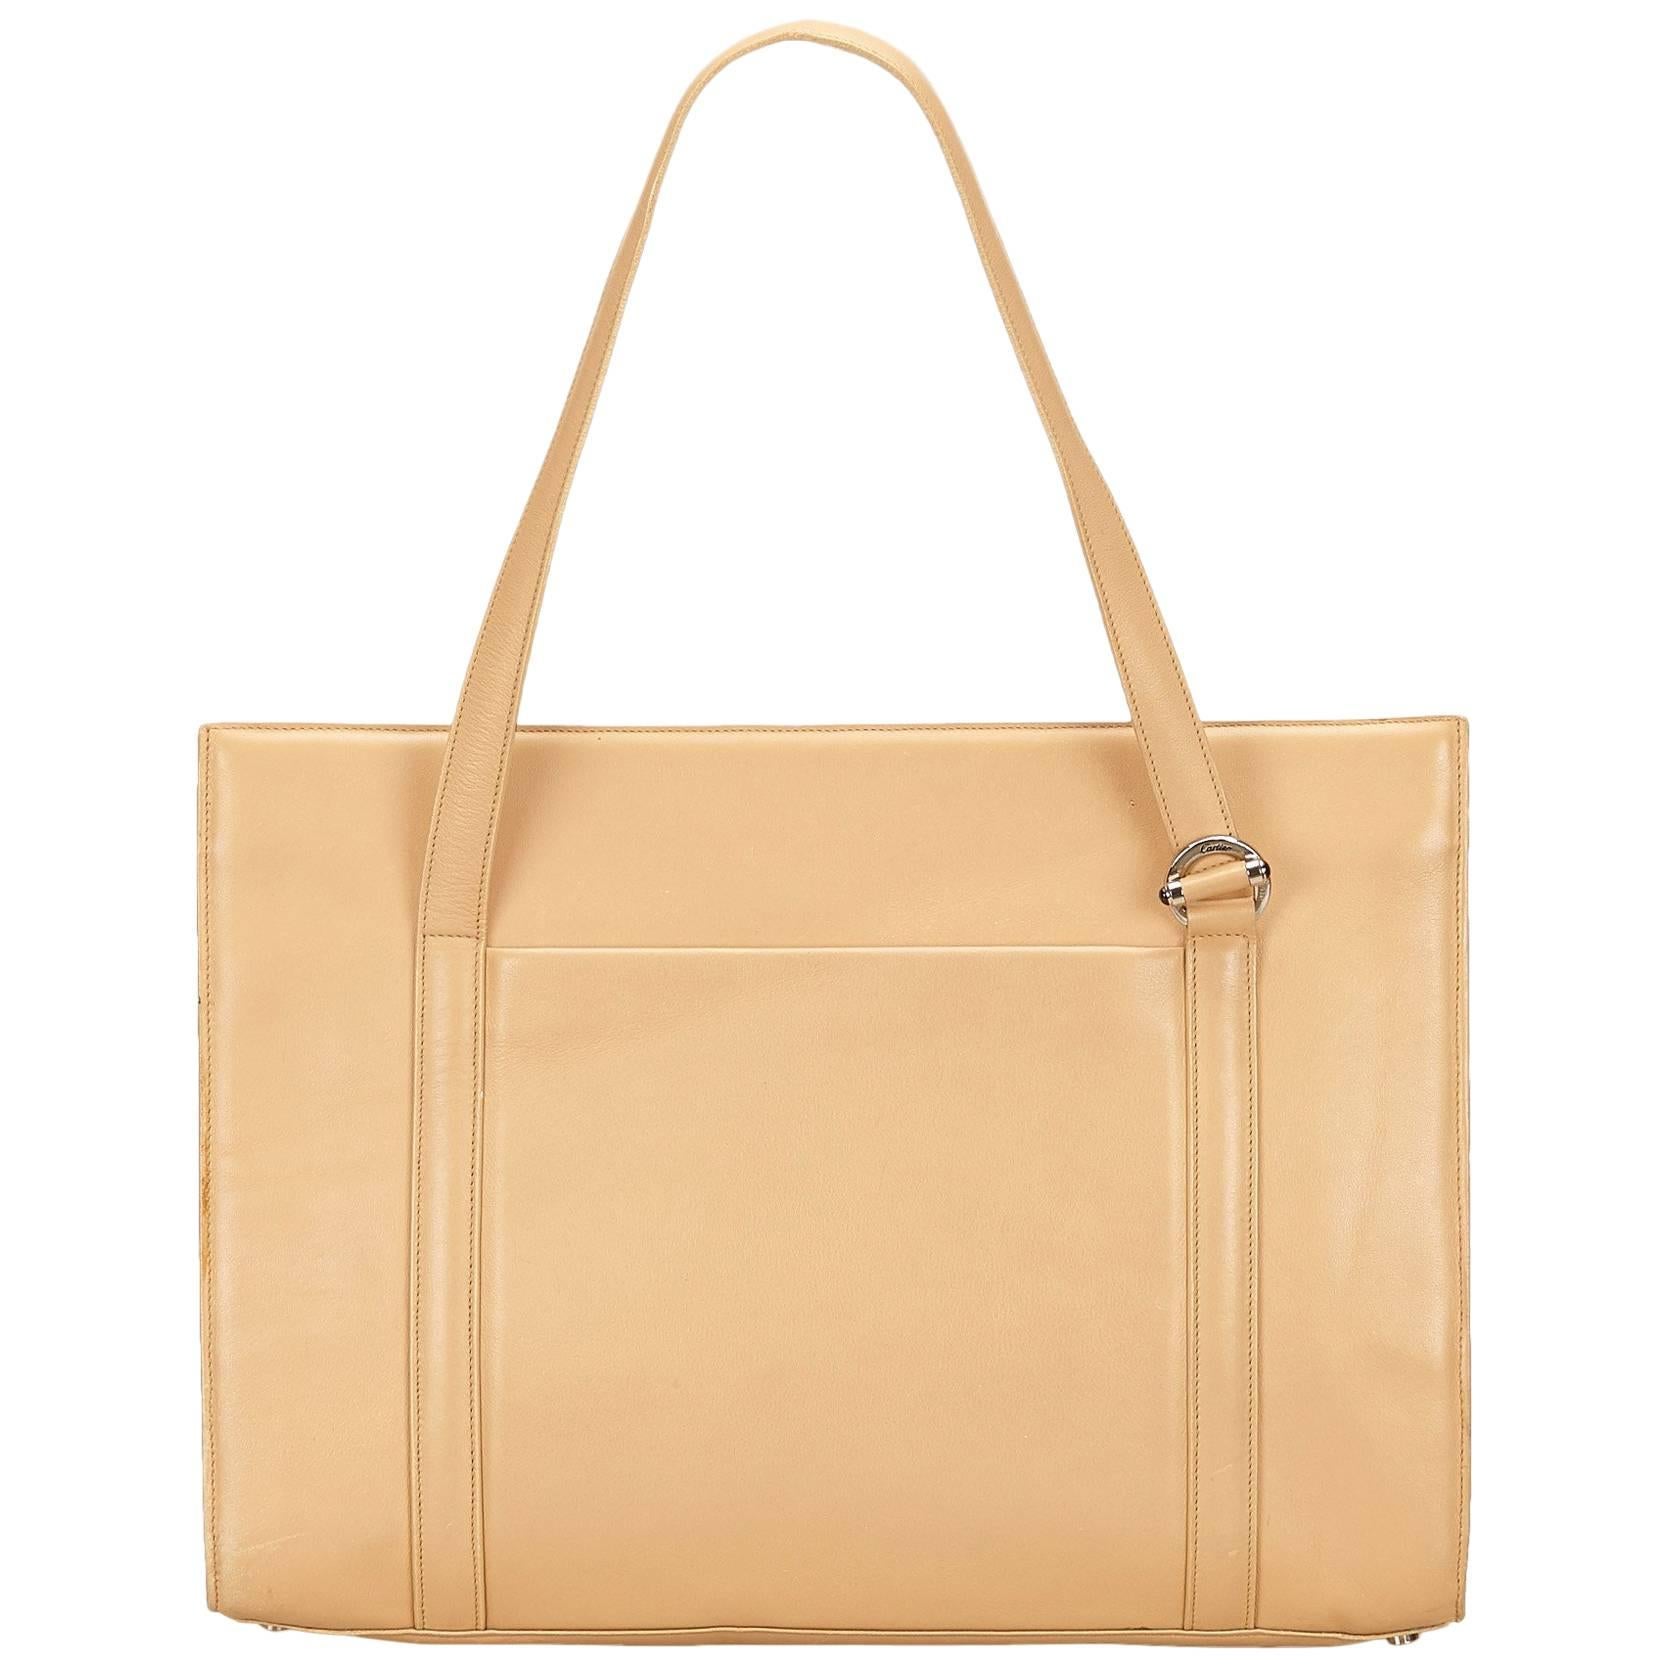 Cartier Brown Tote Bag